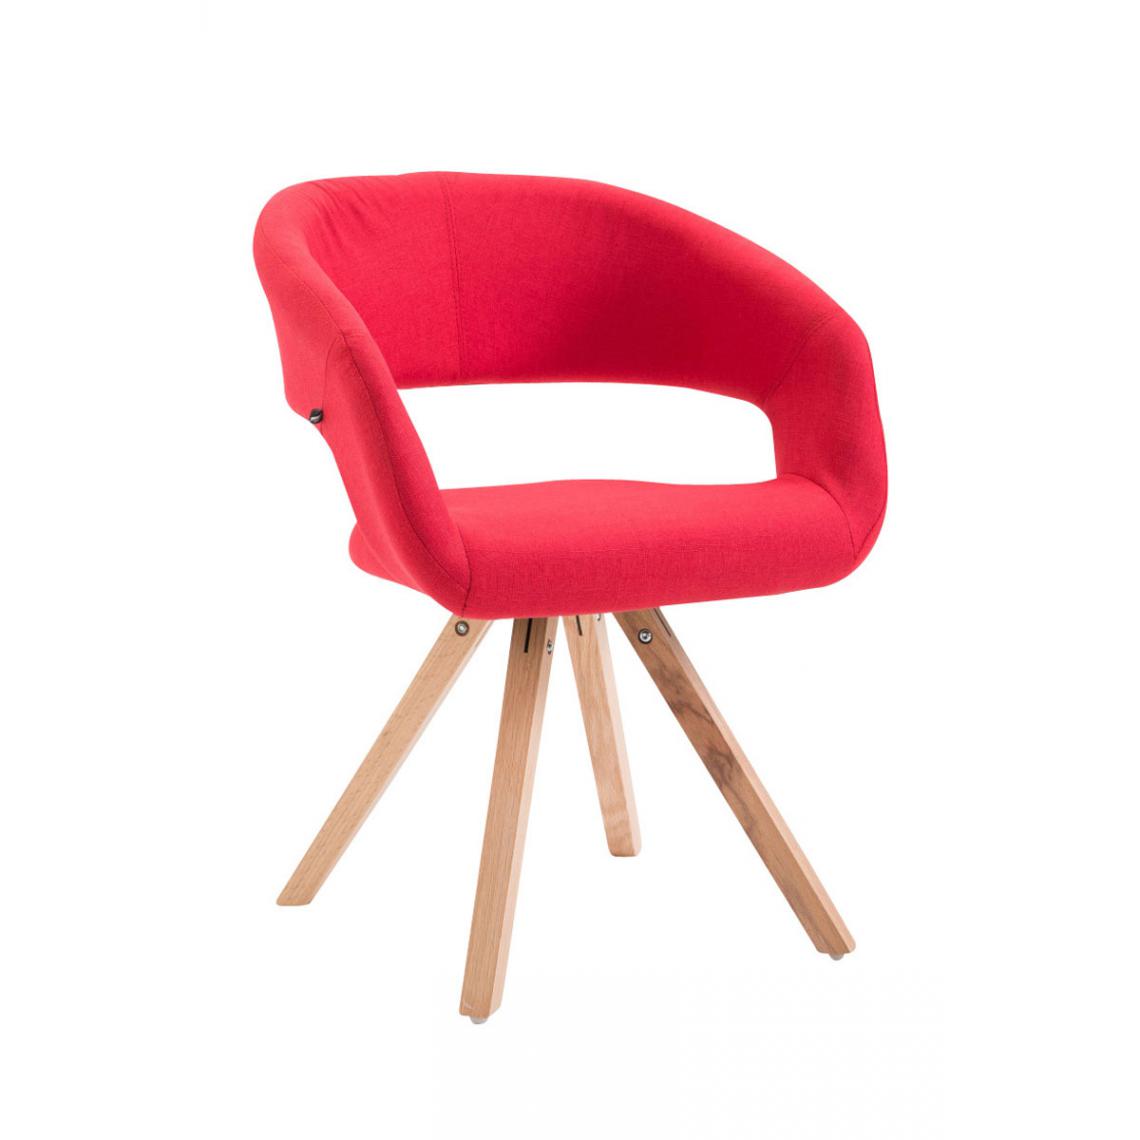 Icaverne - Chic Chaise de salle à manger categorie Asmara tissu Natura couleur rouge - Chaises